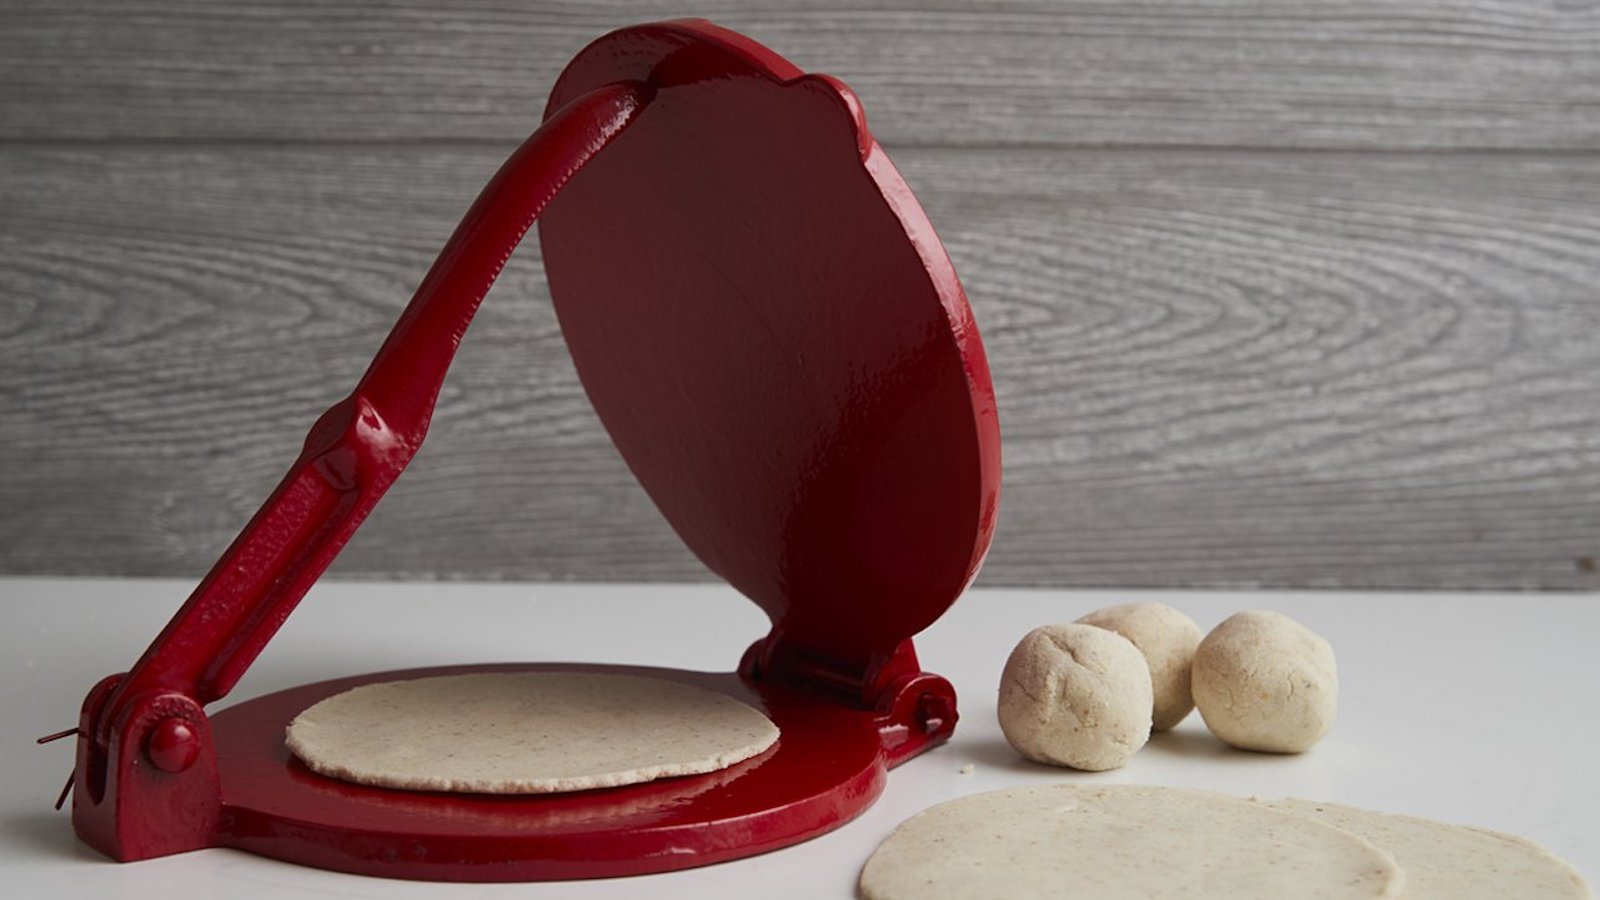 Verve Culture Tortilla Press Kit features cast iron for uniform homemade tortillas